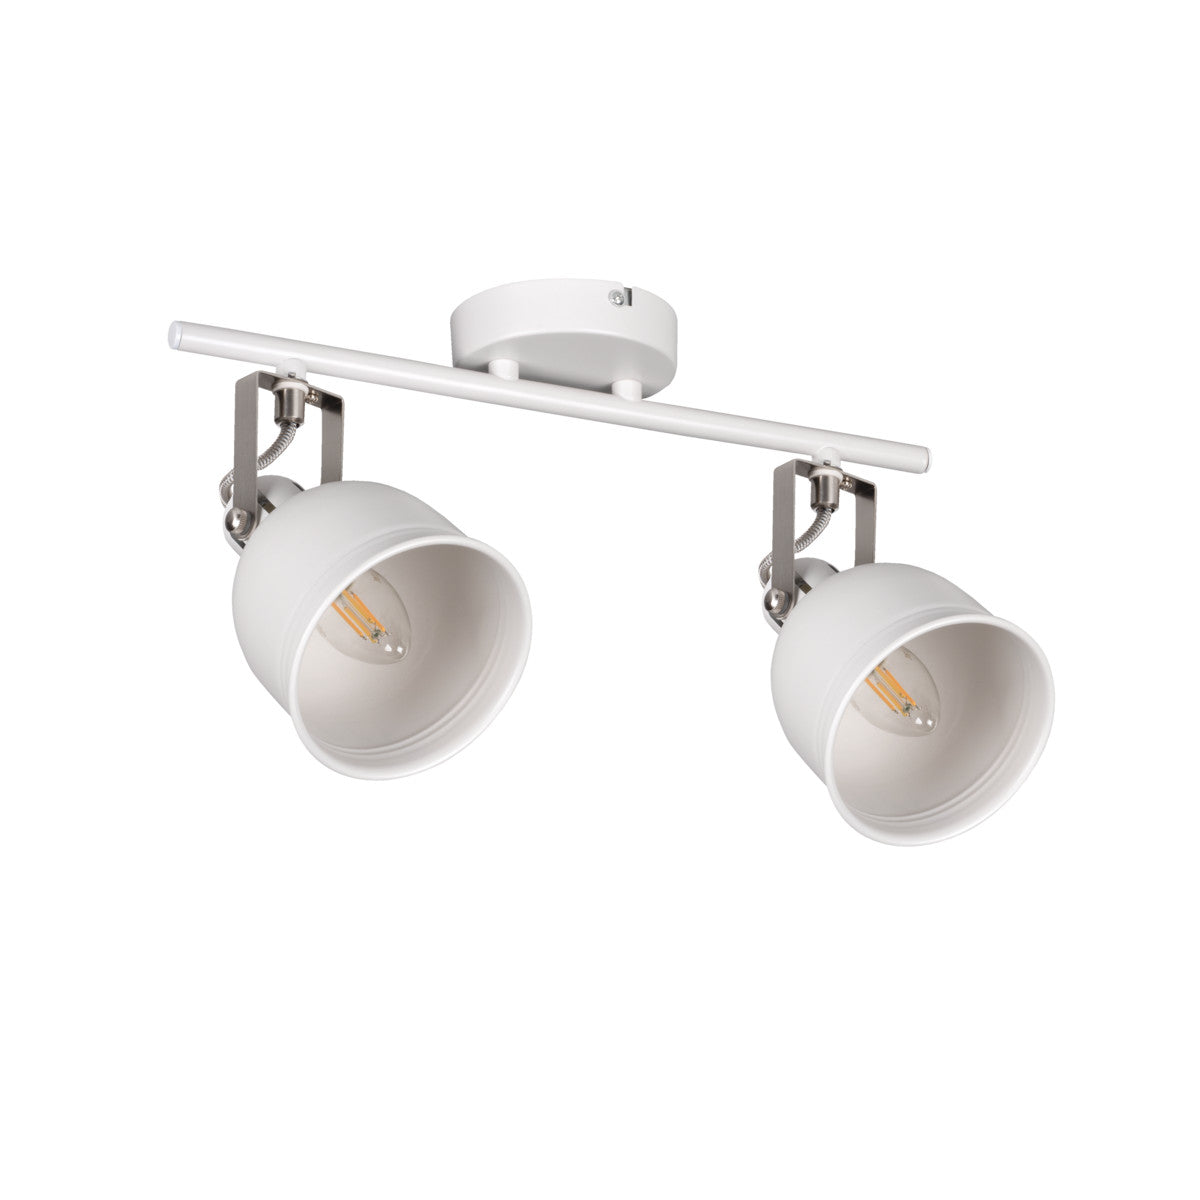 Kanlux DERATO E14 Single Twin Triple Quad Spot Ceiling Mounted Decorative Adjustable Light Fitting